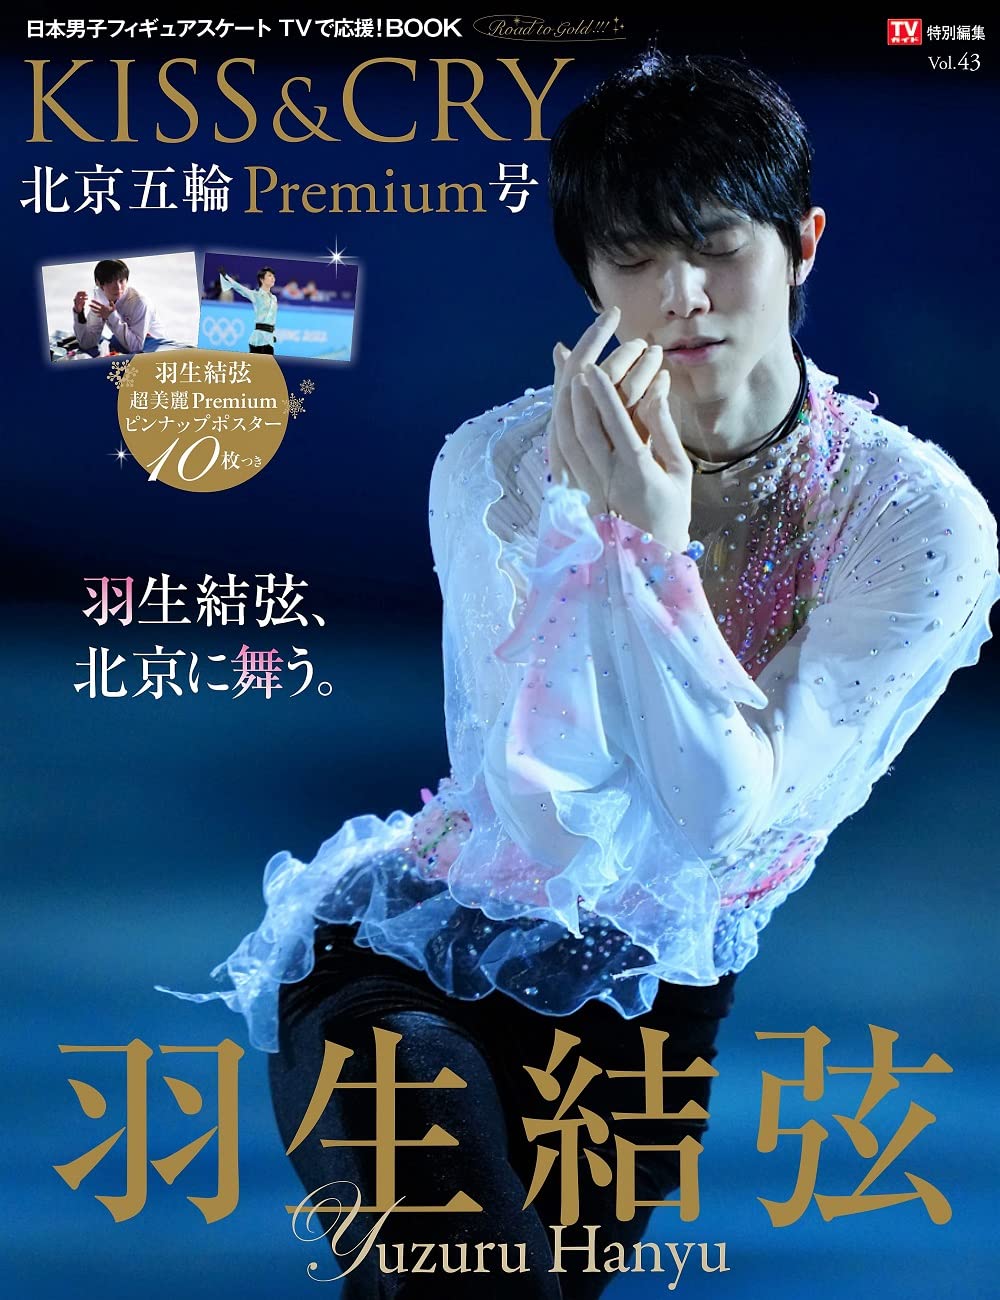 TVガイド特別編集 KISS&CRY Vol.43 北京五輪Premium號 (TOKYO NEWS MOOK 979號)